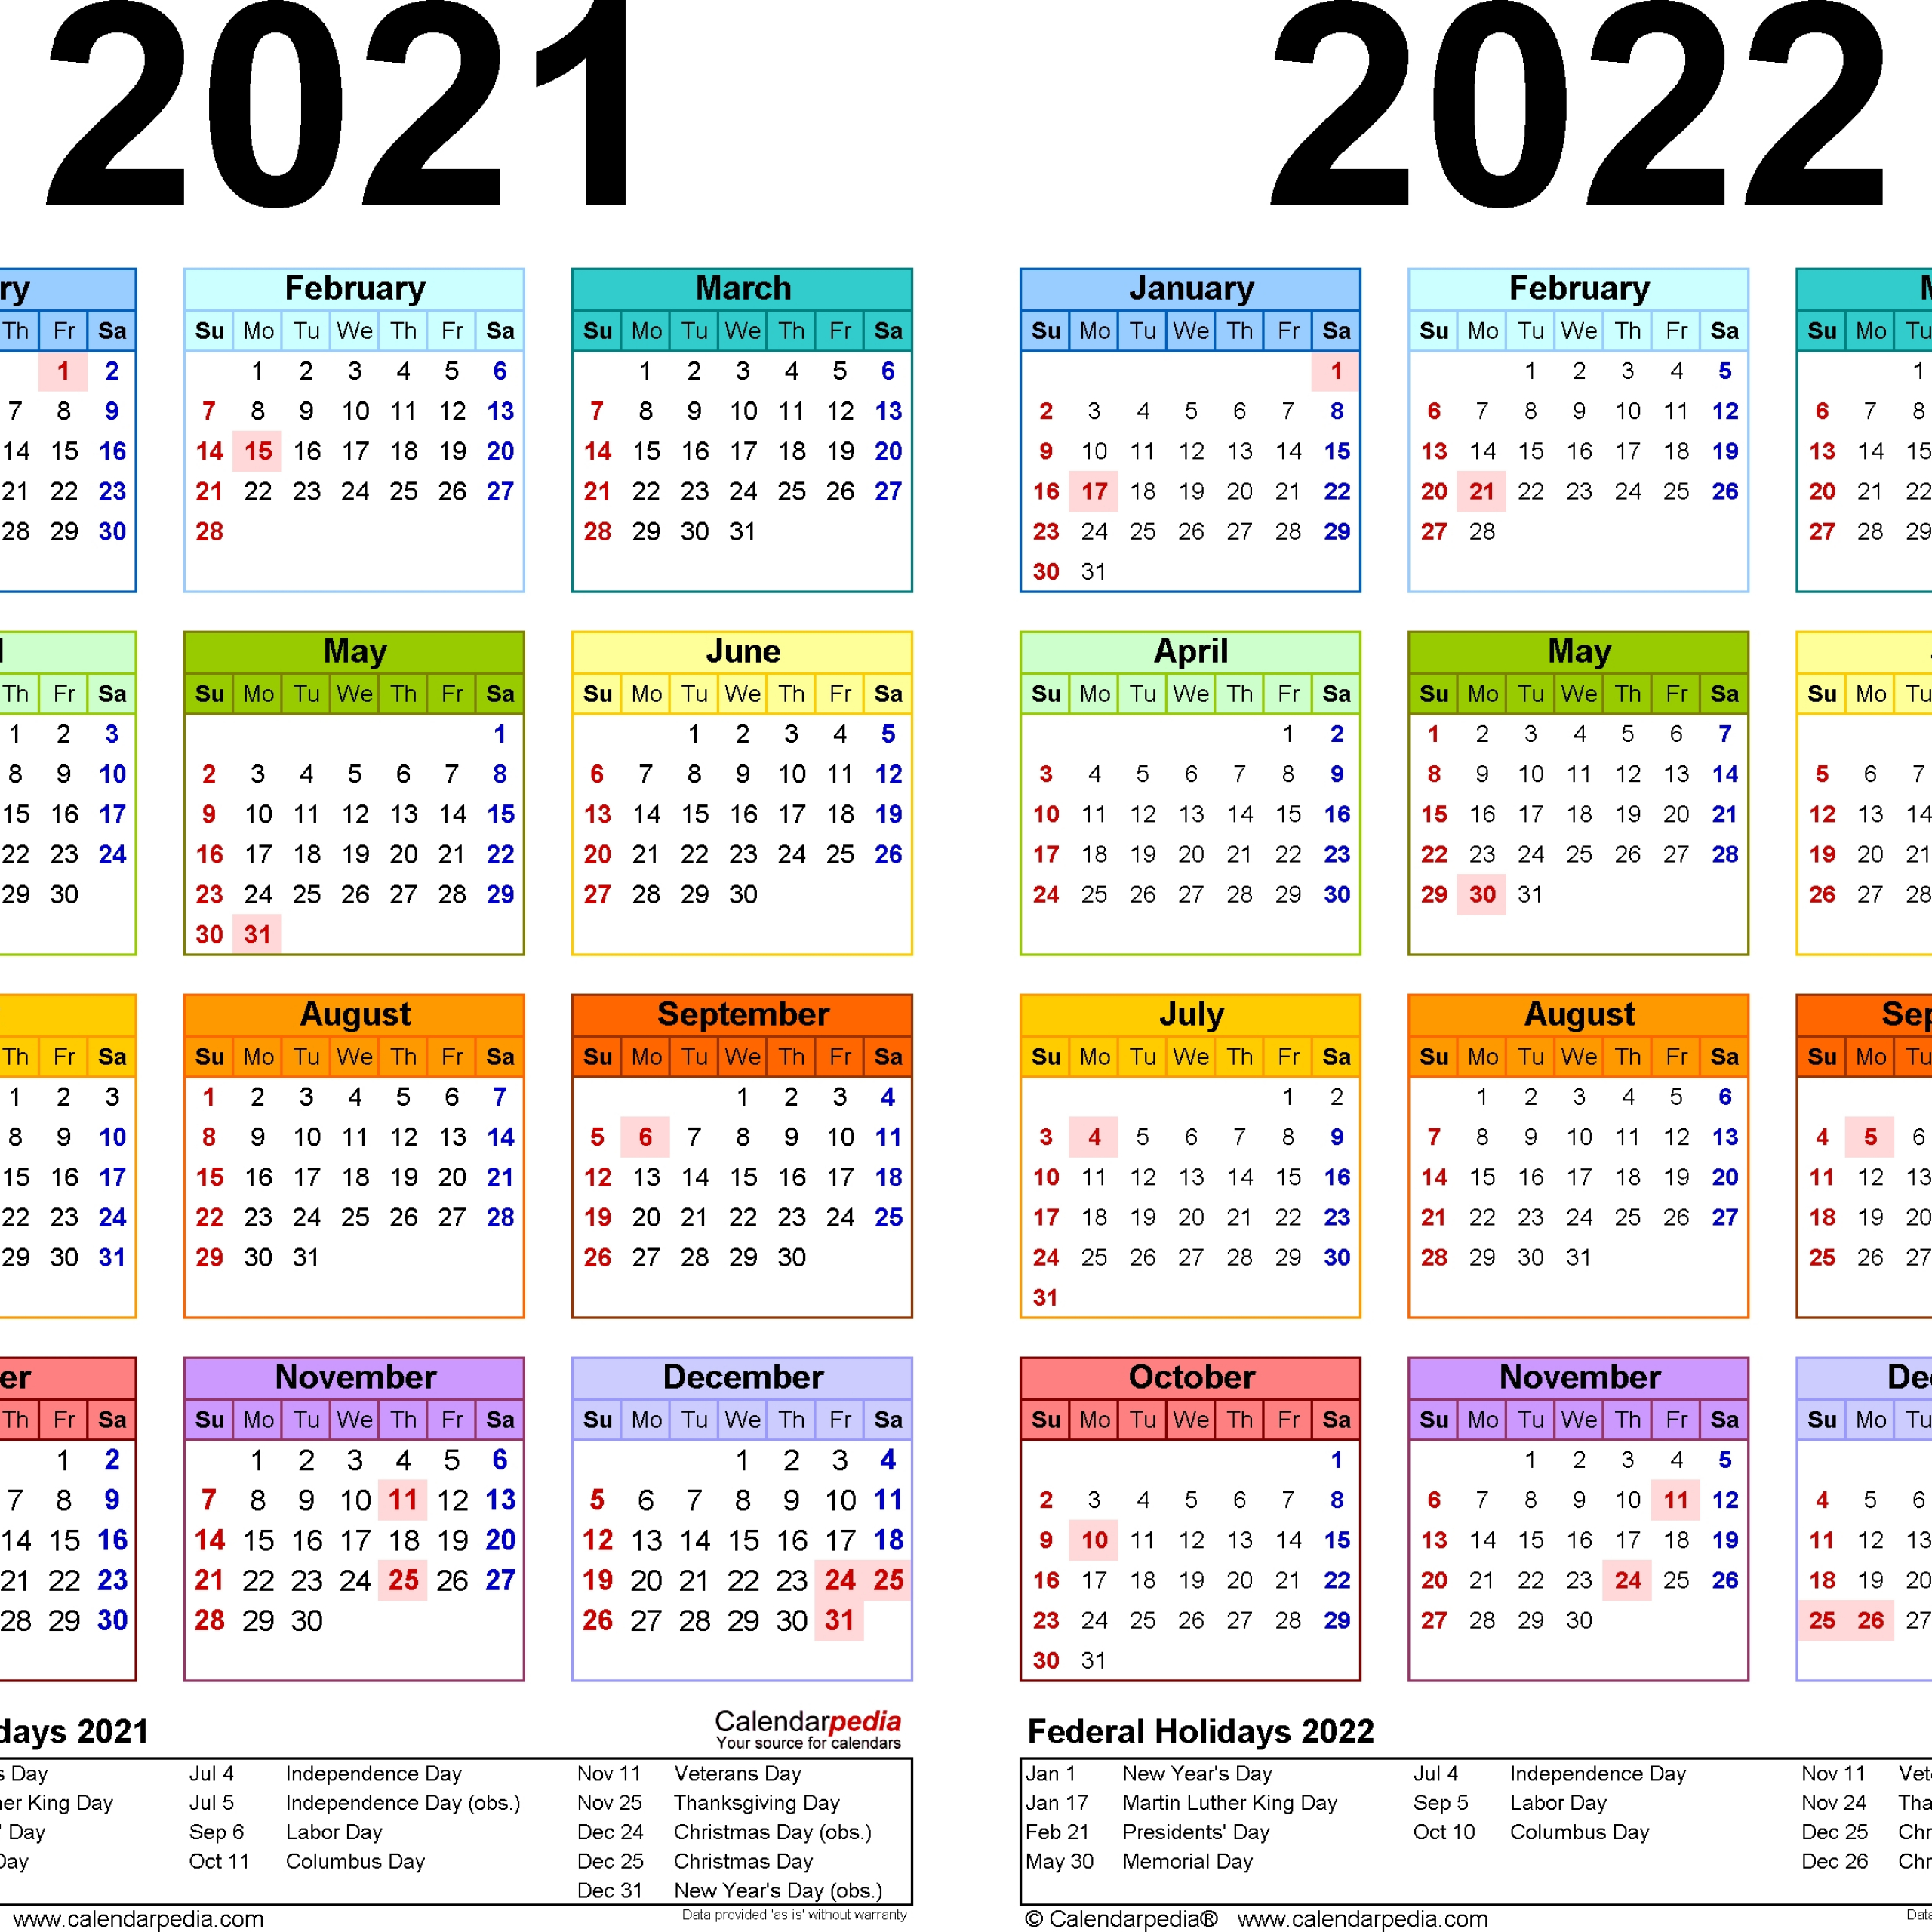 Dec 2021 Calendar Colorful | Avnitasoni within November 2022 Calendar Word Avnitasoni